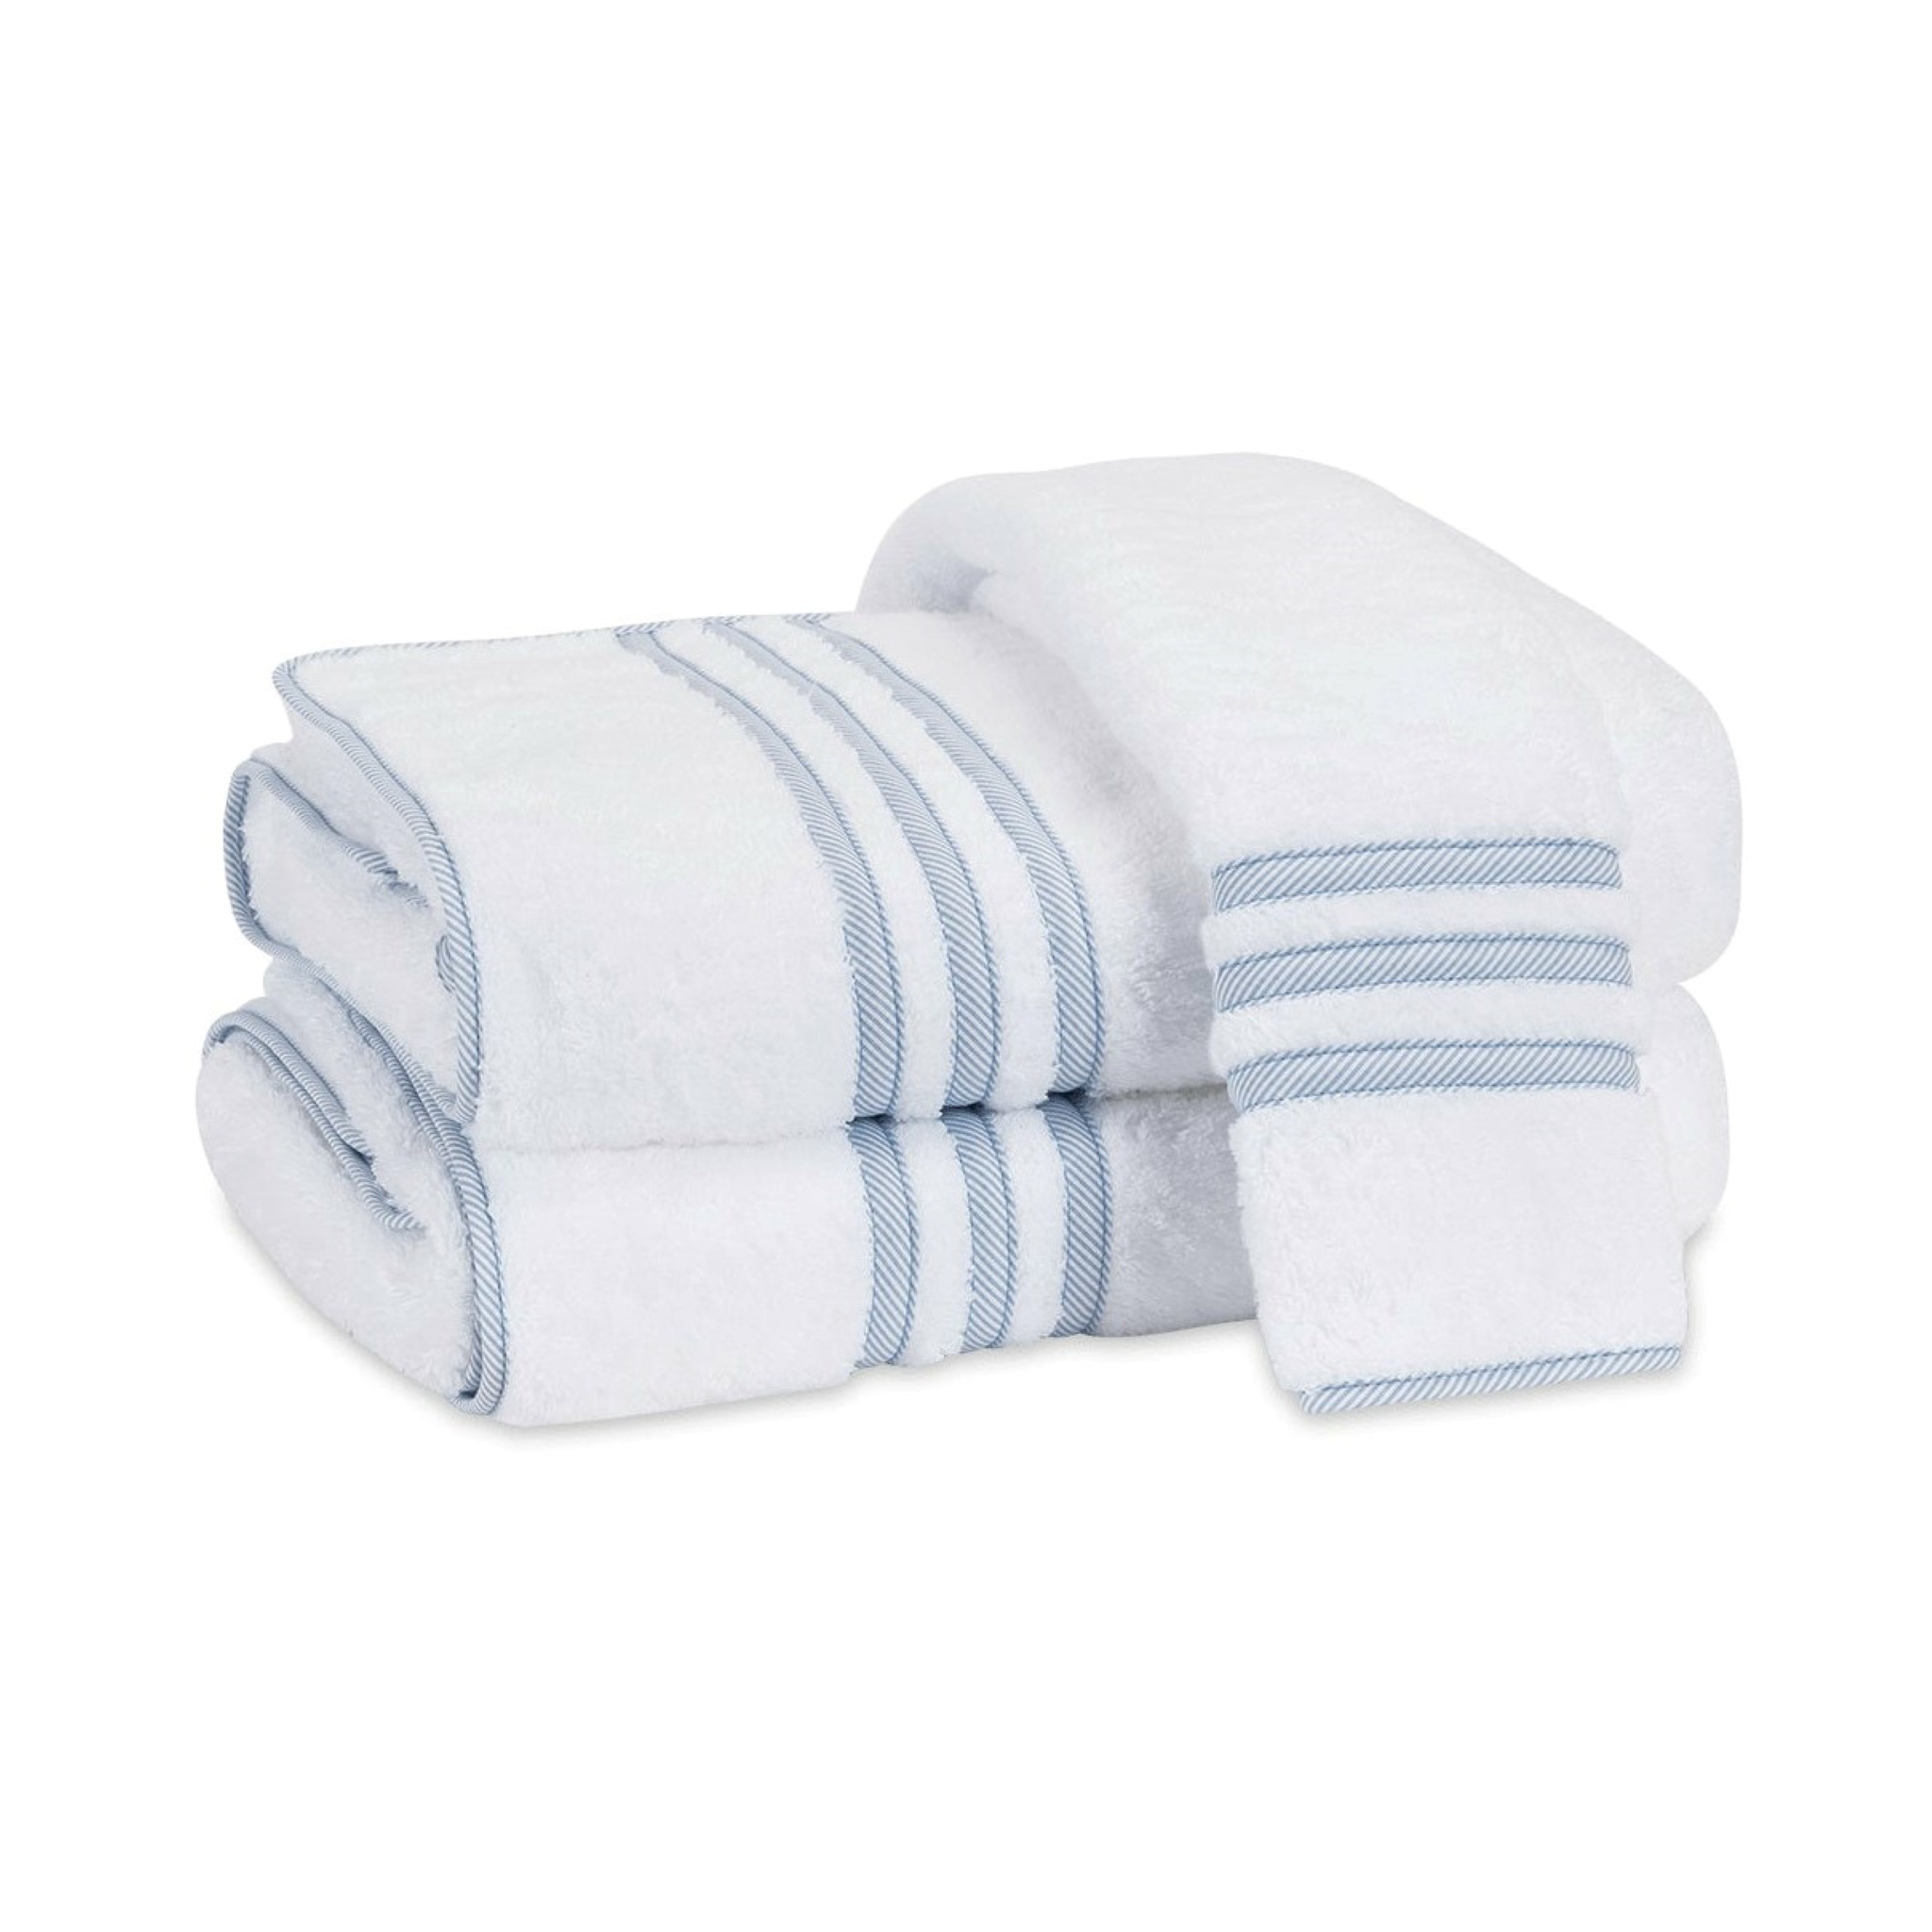 Striped Linen Towel, Softened Linen Bath Towel, Sauna Towel, Beach Sheet,  Bath Sheet, Large Bath Towel, Linen Beach Towel, Striped Towel 